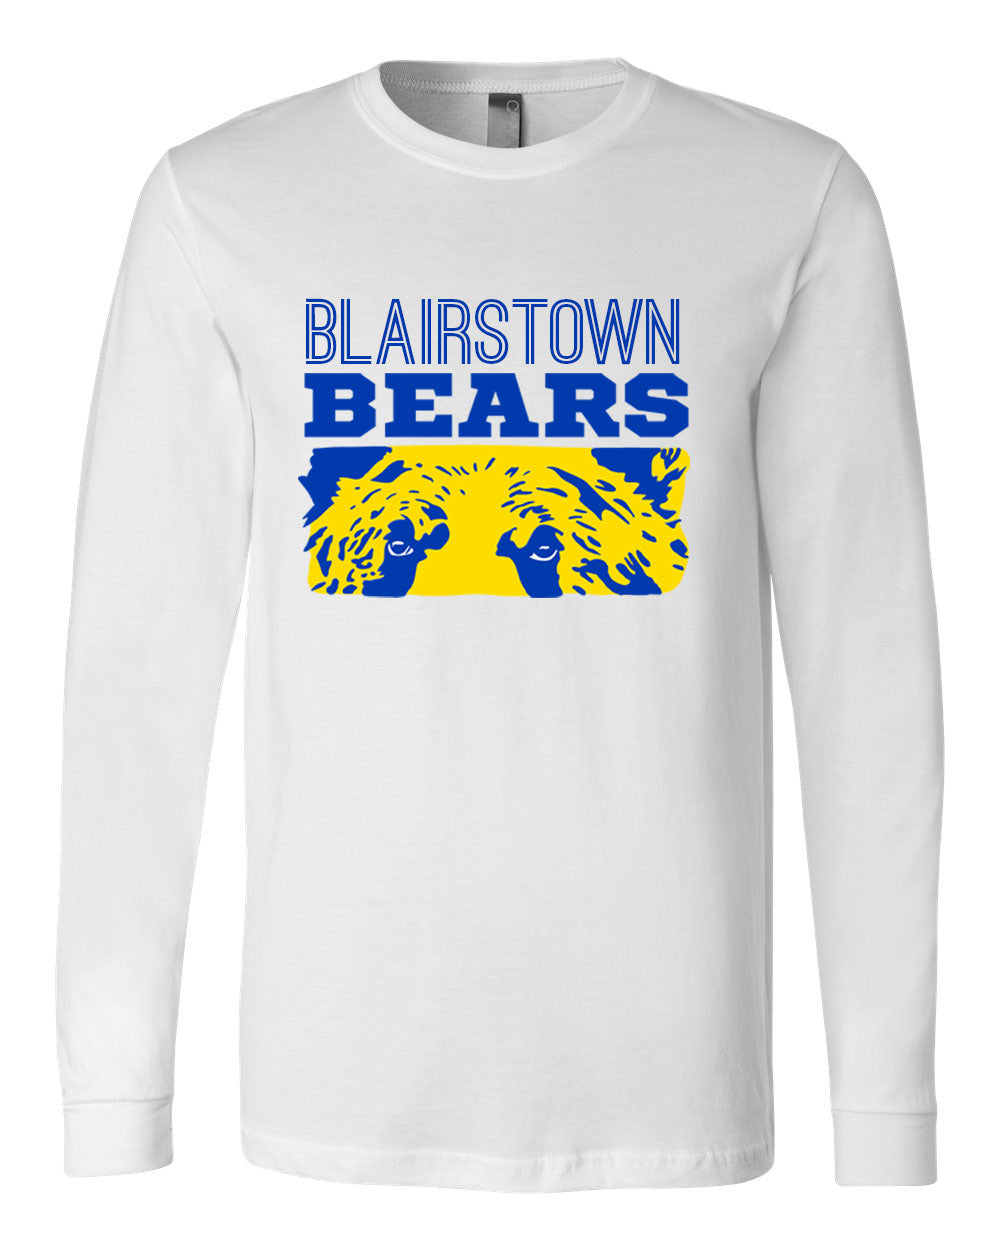 Bears design 4 Long Sleeve Shirt